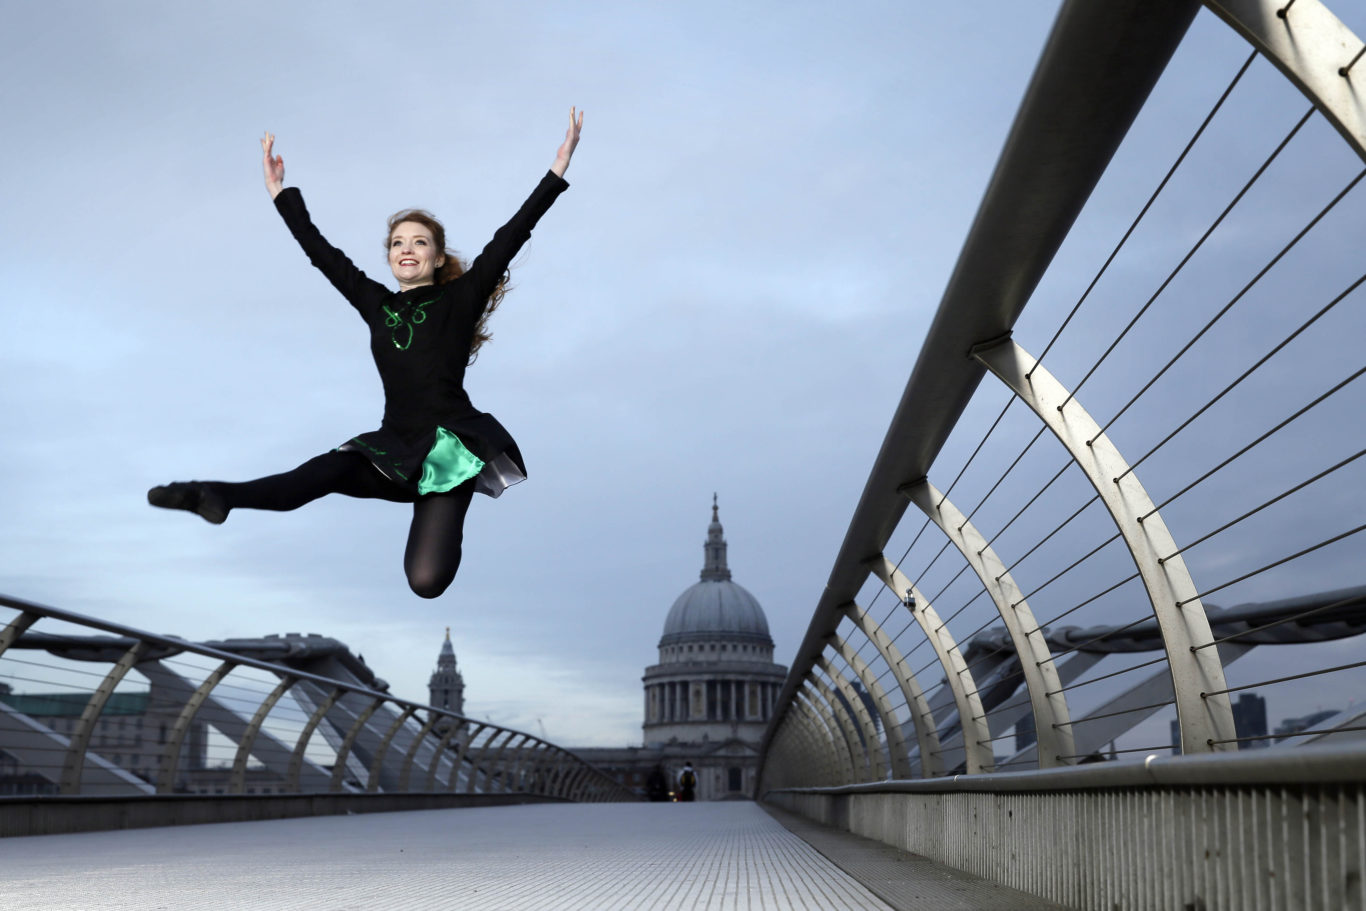 Irish dancers perform on London's Millennium Bridge (Tim Ireland/PA)